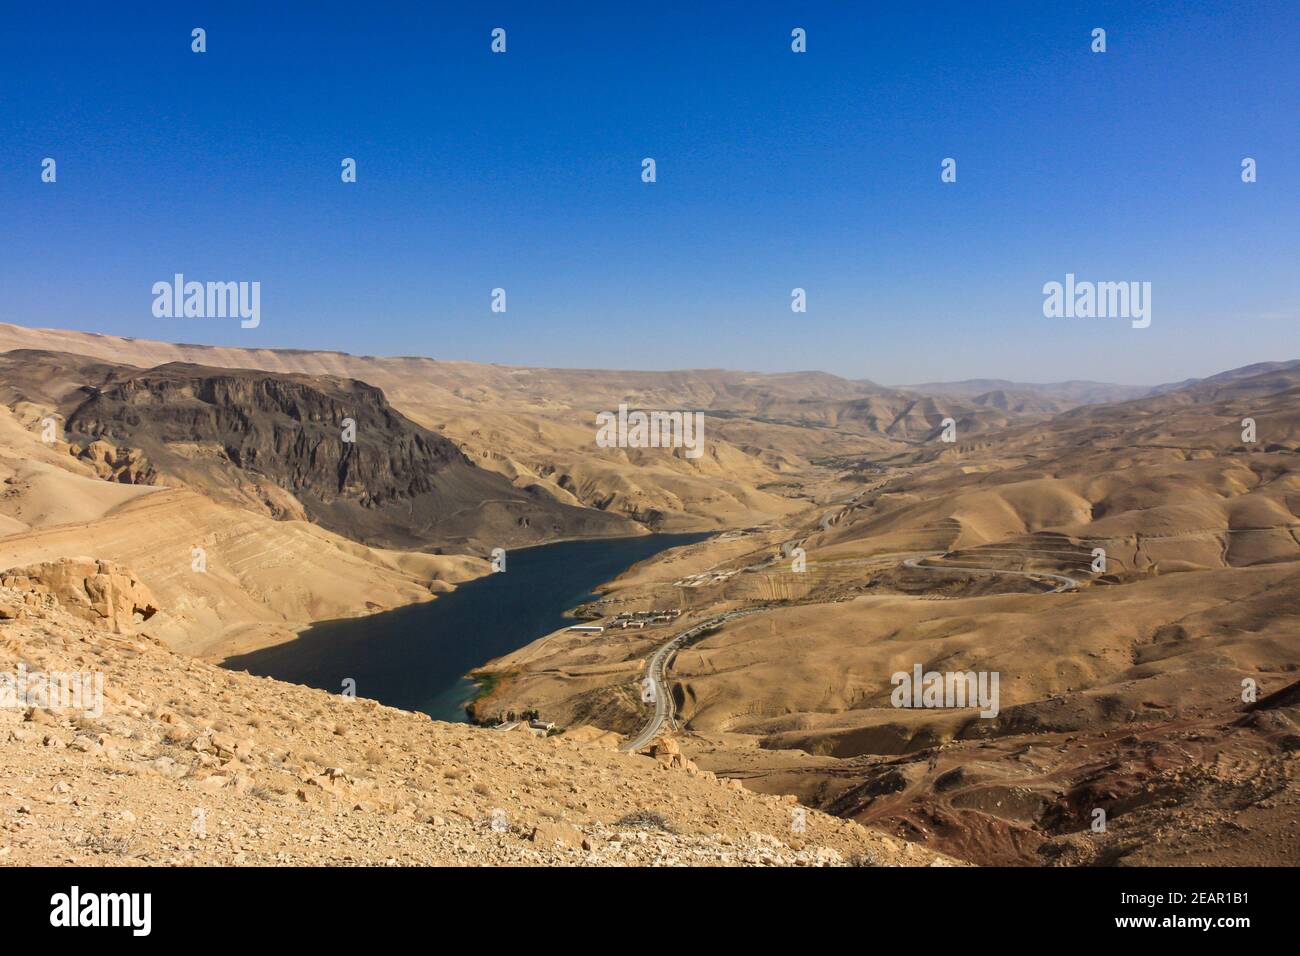 The Landscape and desert in Jordan Stock Photo